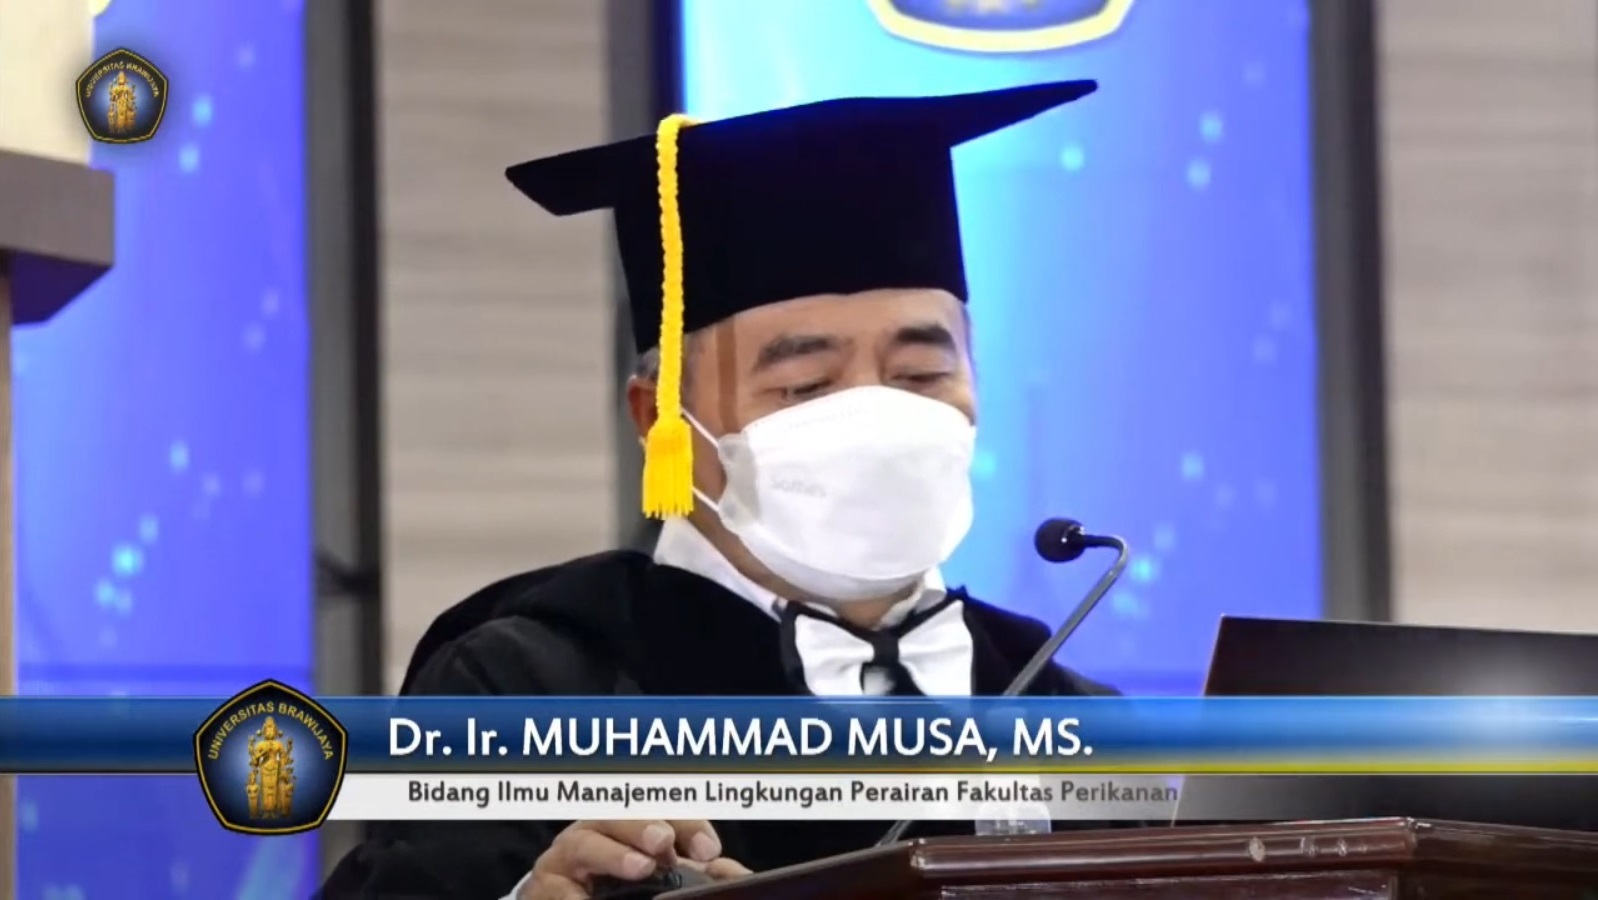 Pengukuhan Prof. Dr. Ir. Muhammad Musa, MS